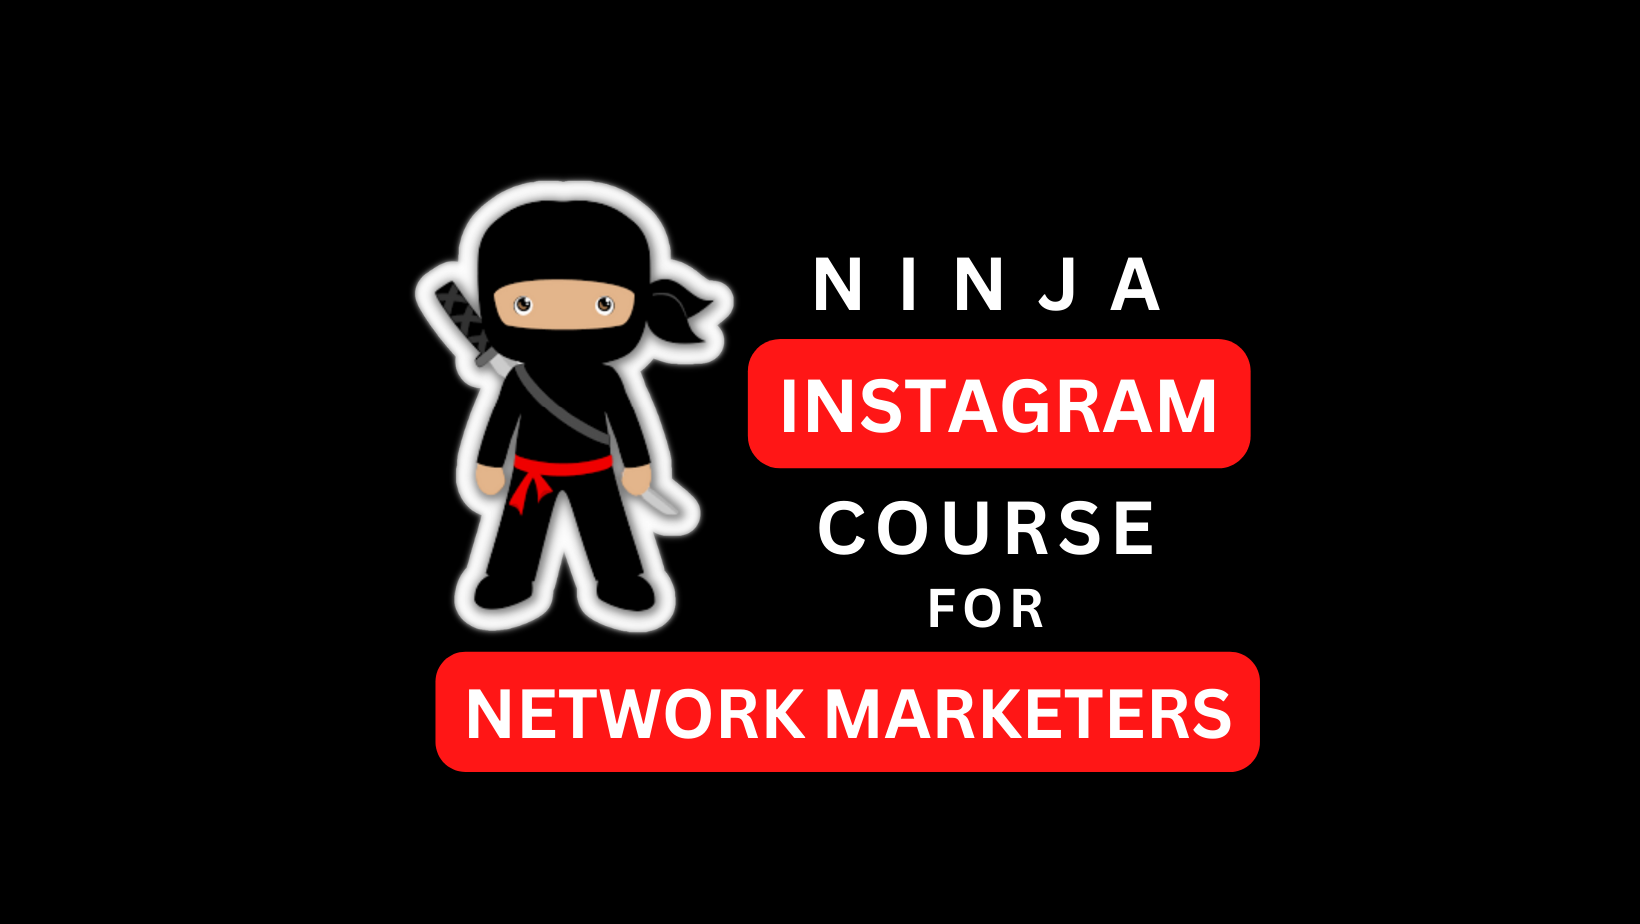 Ninja Instagram Mastery for Network Marketers